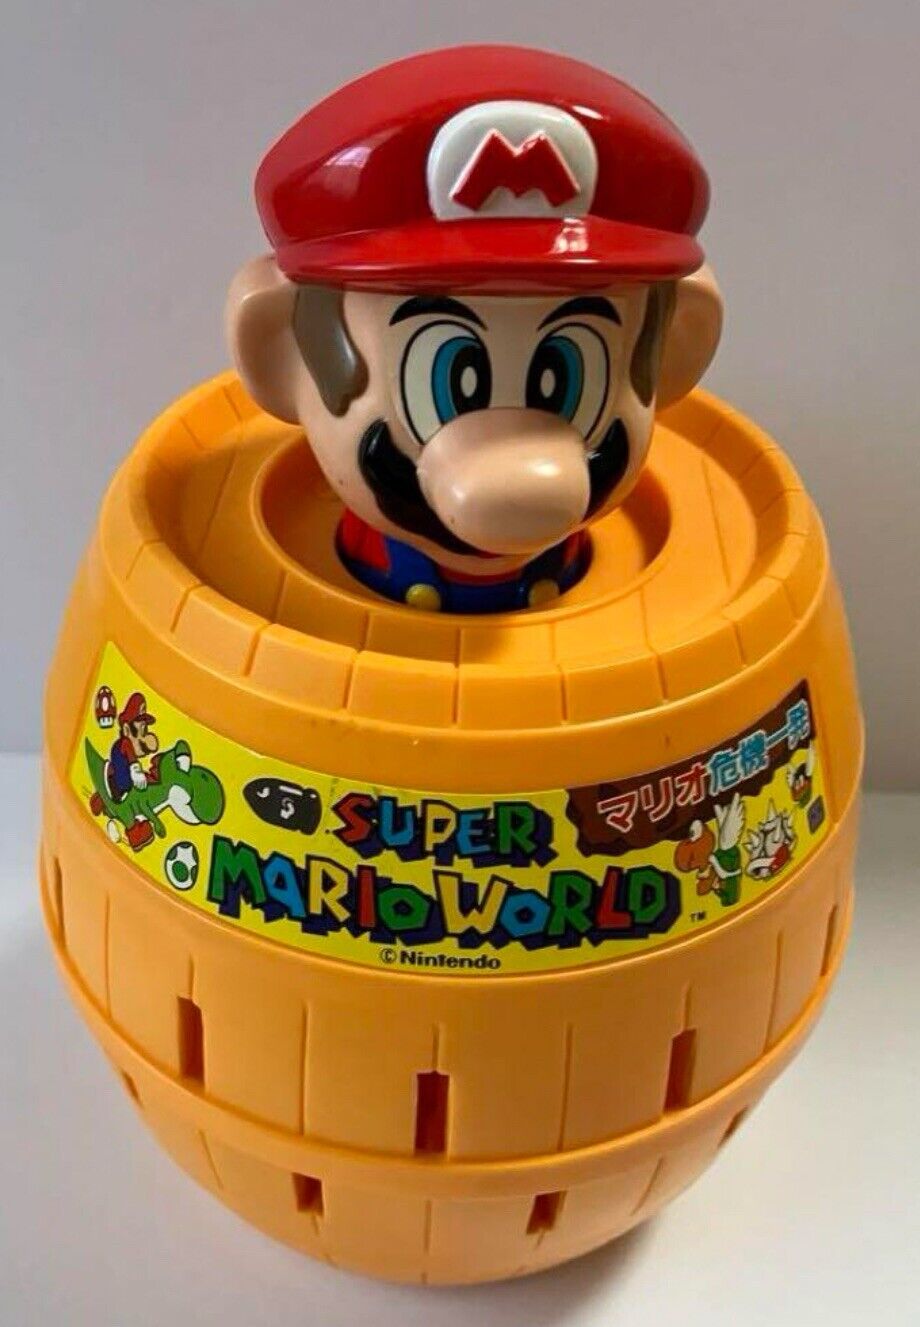 Vintage 1979 Super Mario World Kiki Ippatsu Used Tomy Pirate pop up game